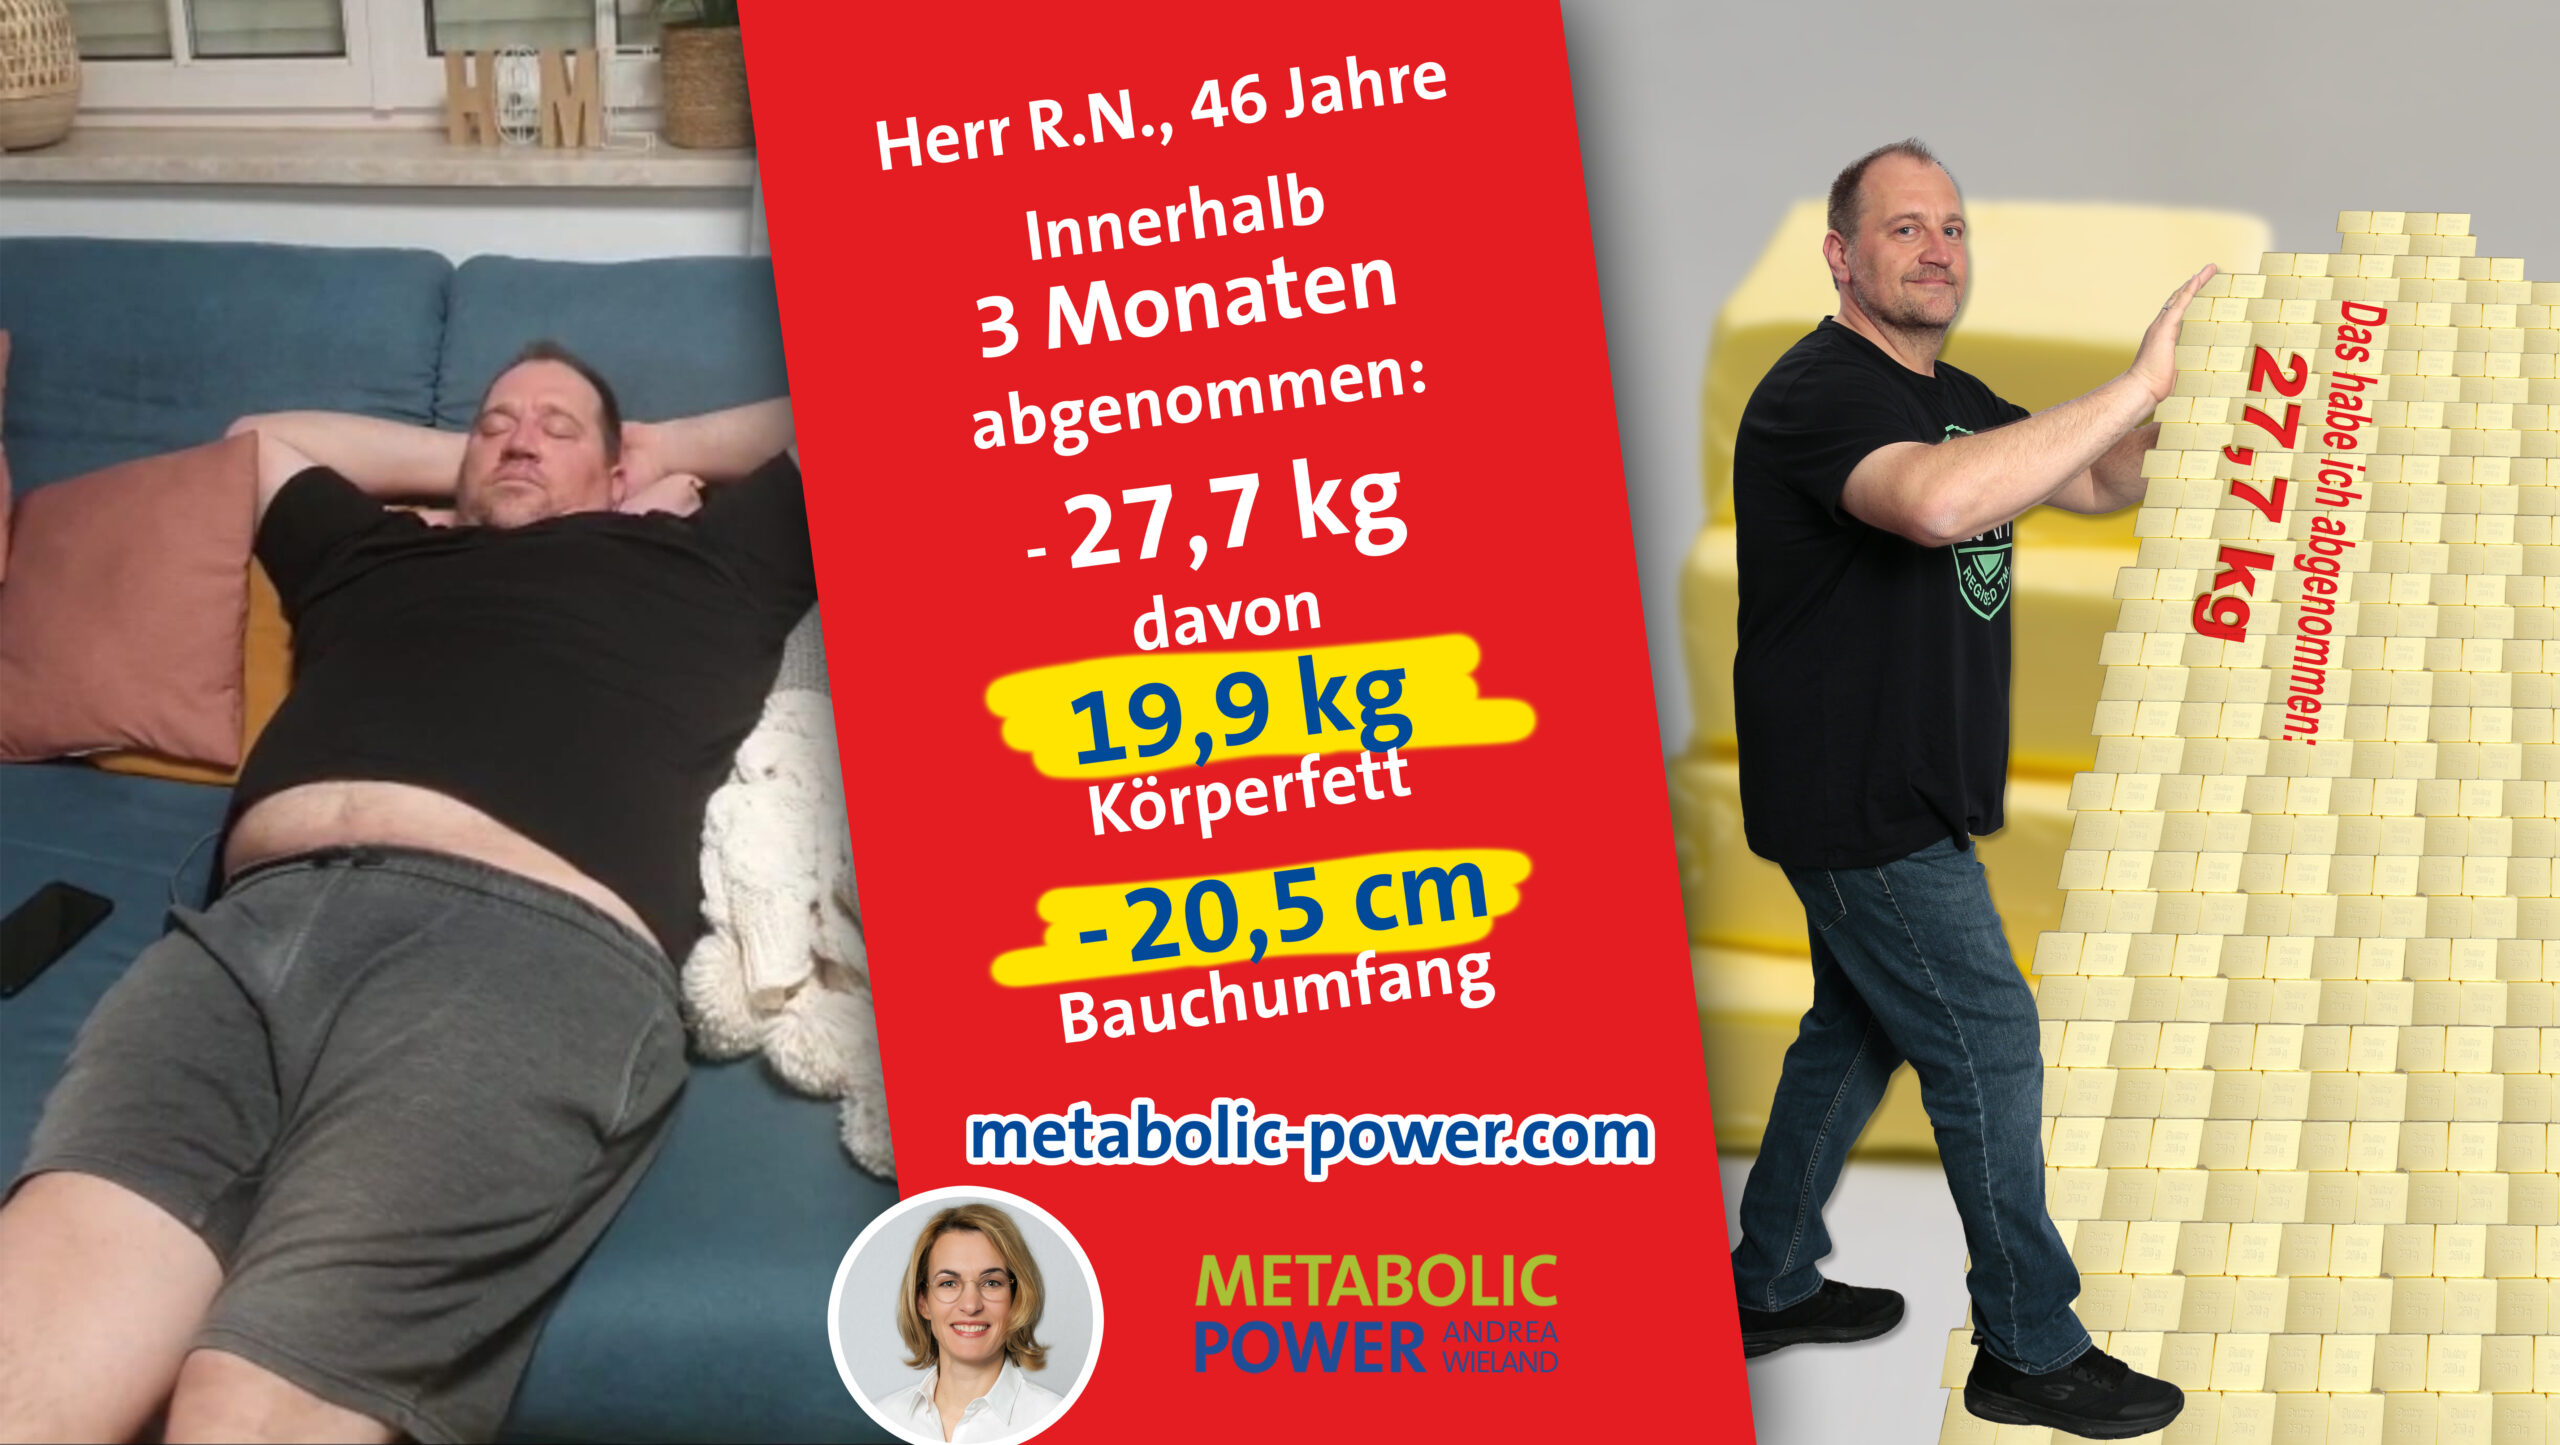 R. N. Abnehmen aber sicher 27 kg in 3 Monaten Andrea Wieland